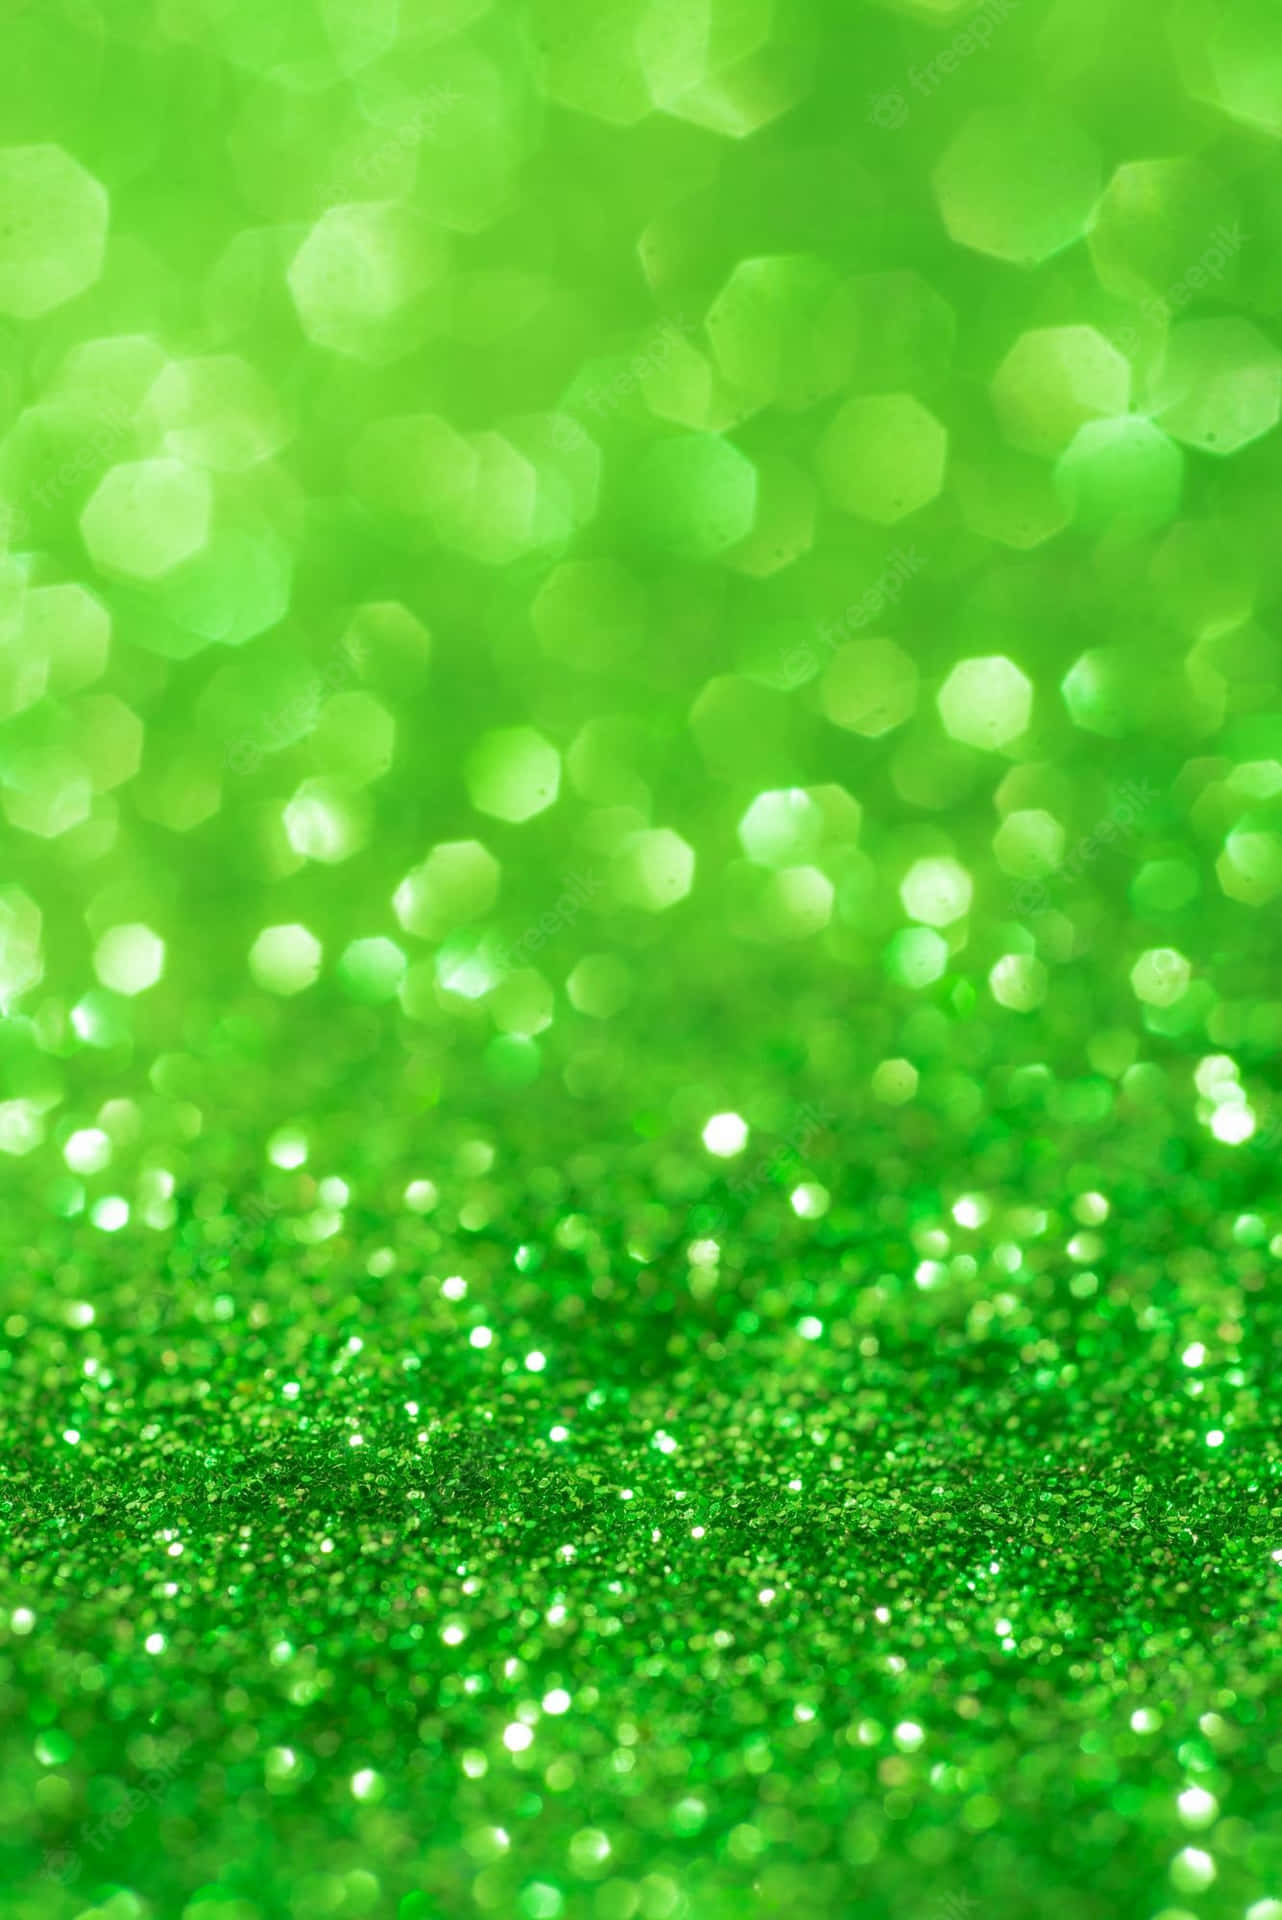 Lys lind grøn glitter baggrund med bokeh virkninger